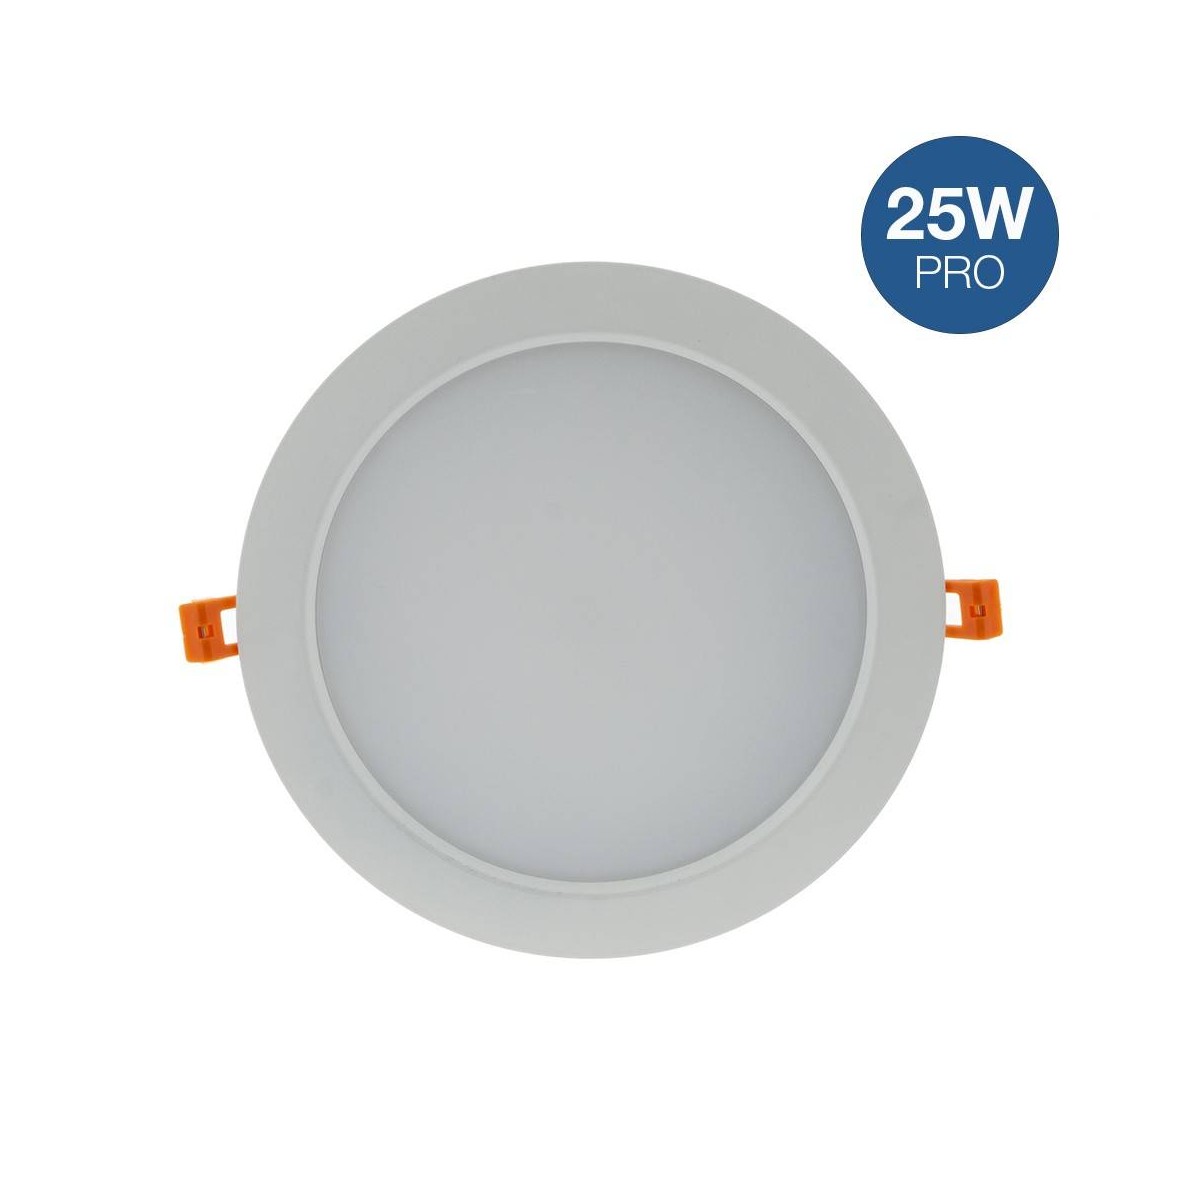 Placa downlight LED encastrável circular 25W